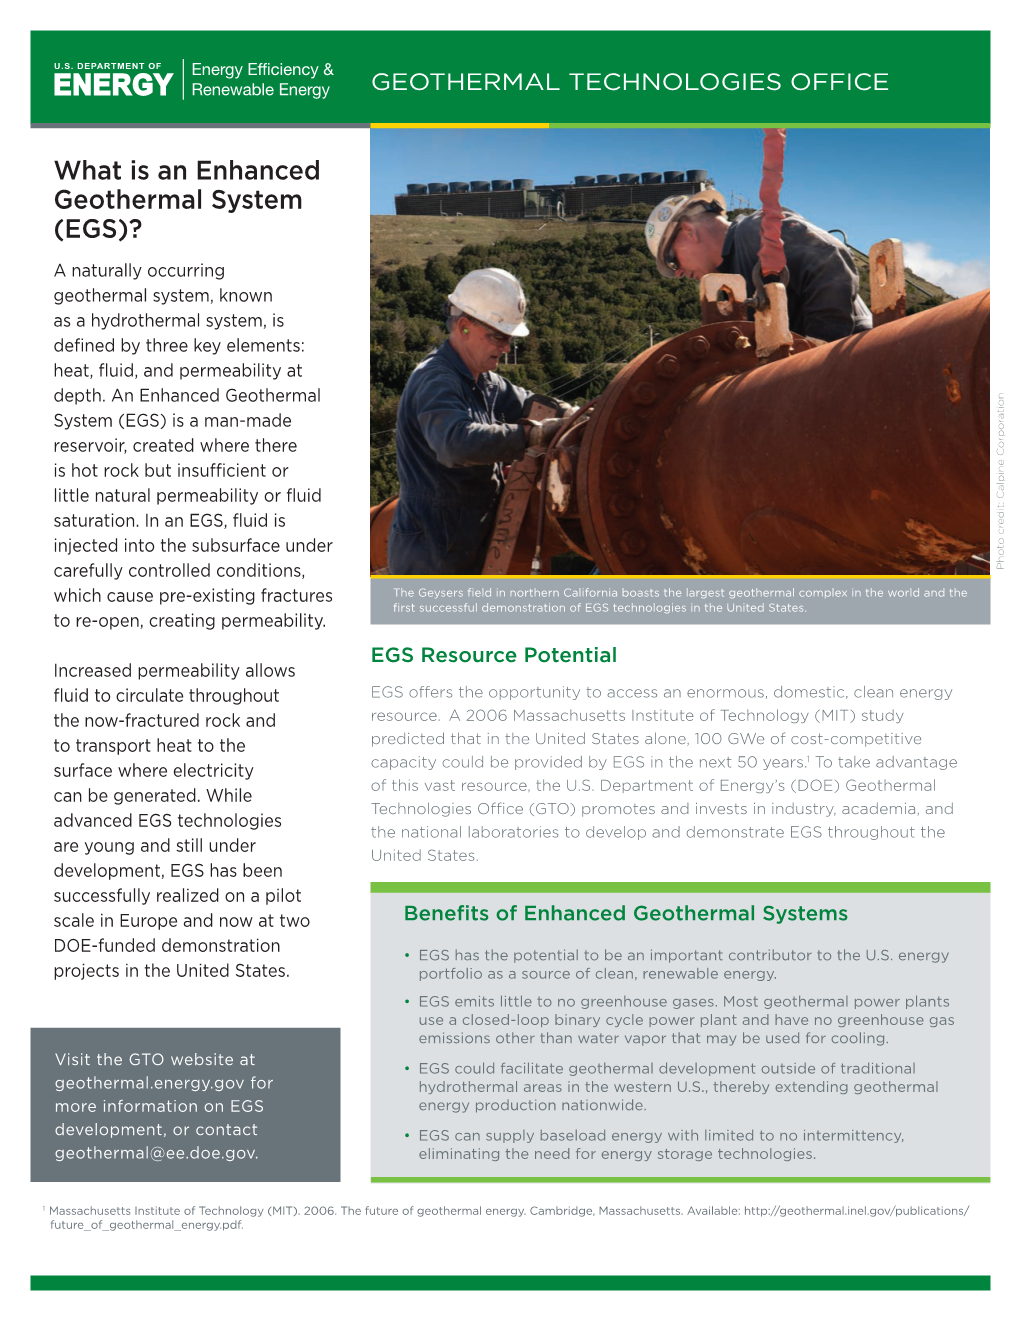 Enhanced Geothermal System (EGS) Fact Sheet